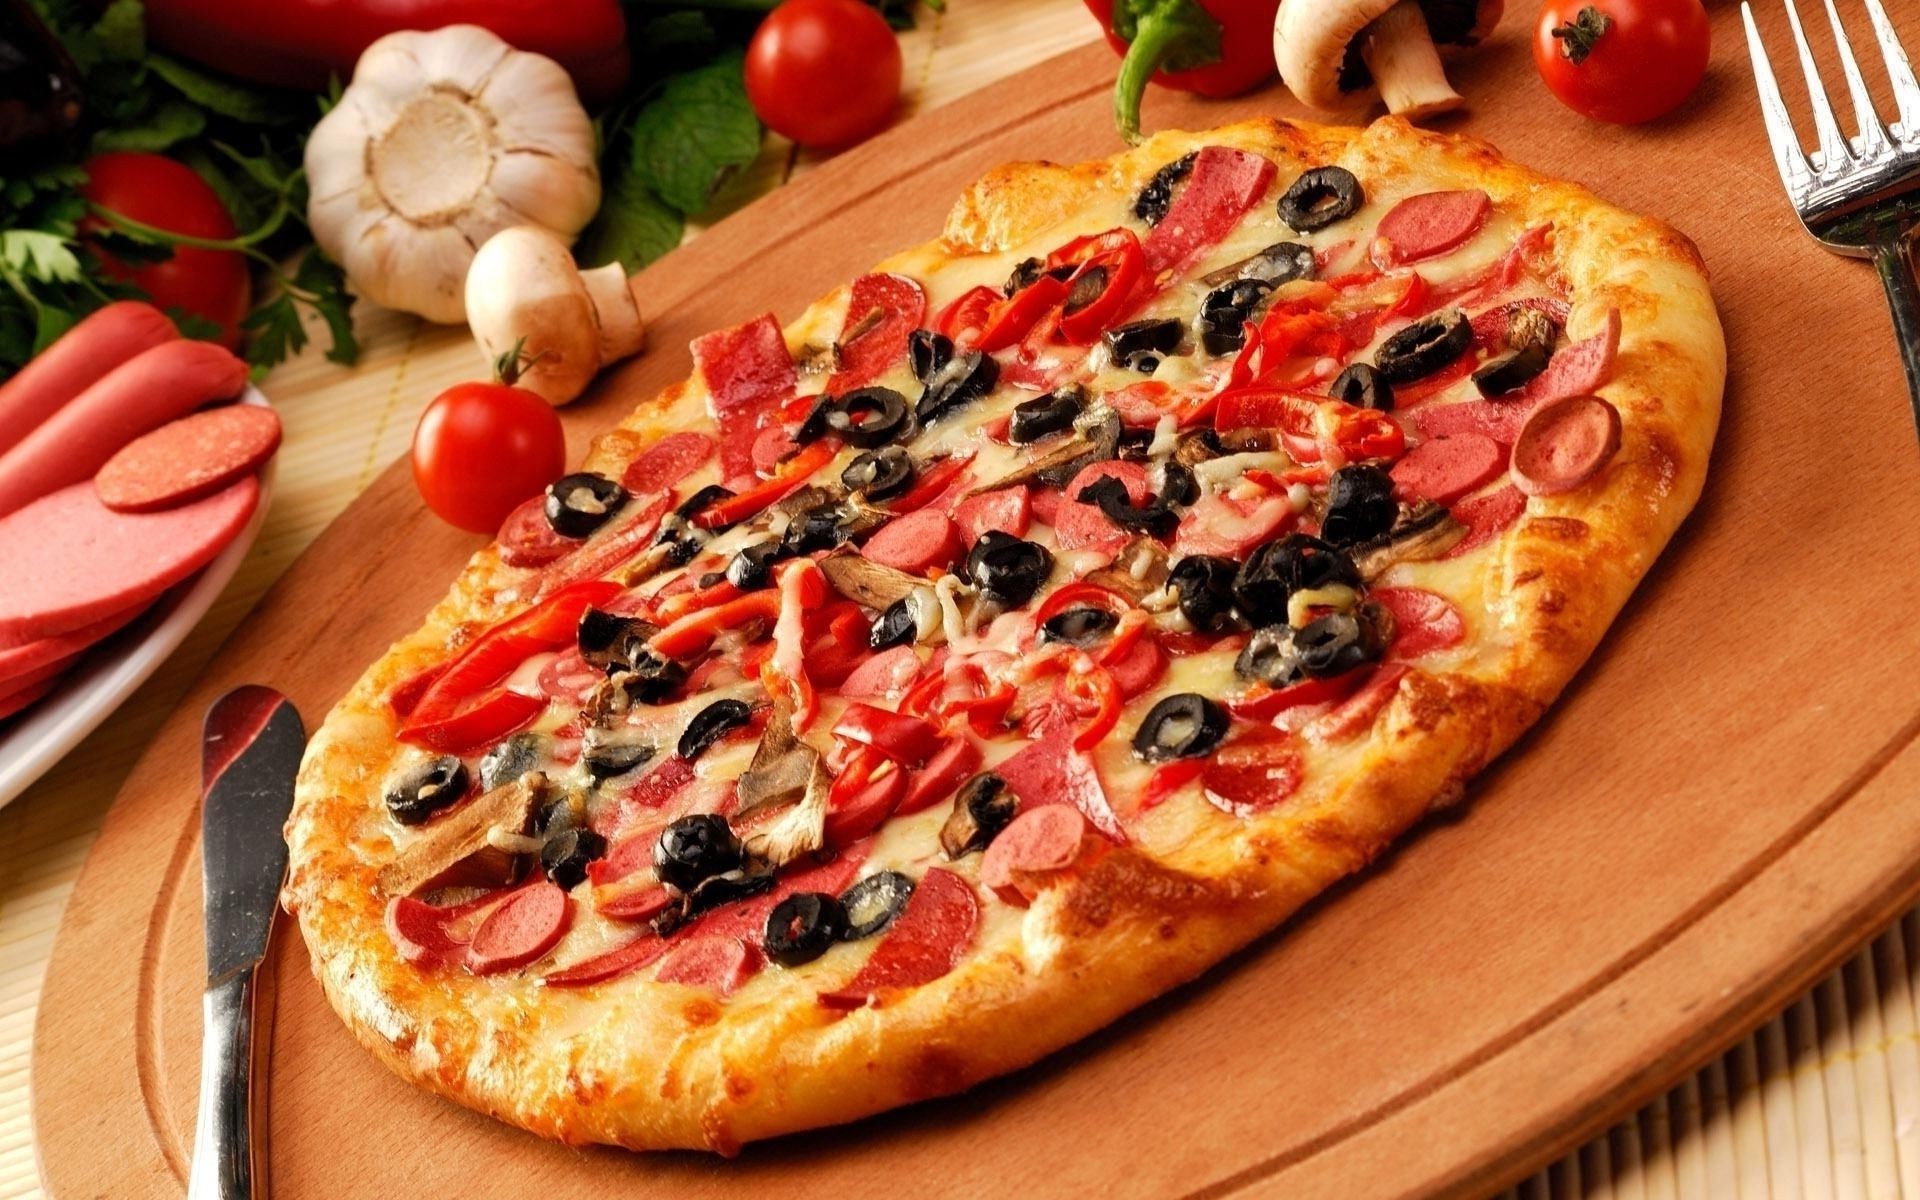 pizza cheese pepperoni crust dough mozzarella salami tomato fast food refreshment slice mushroom ham pie supreme meal sauce lunch pastry